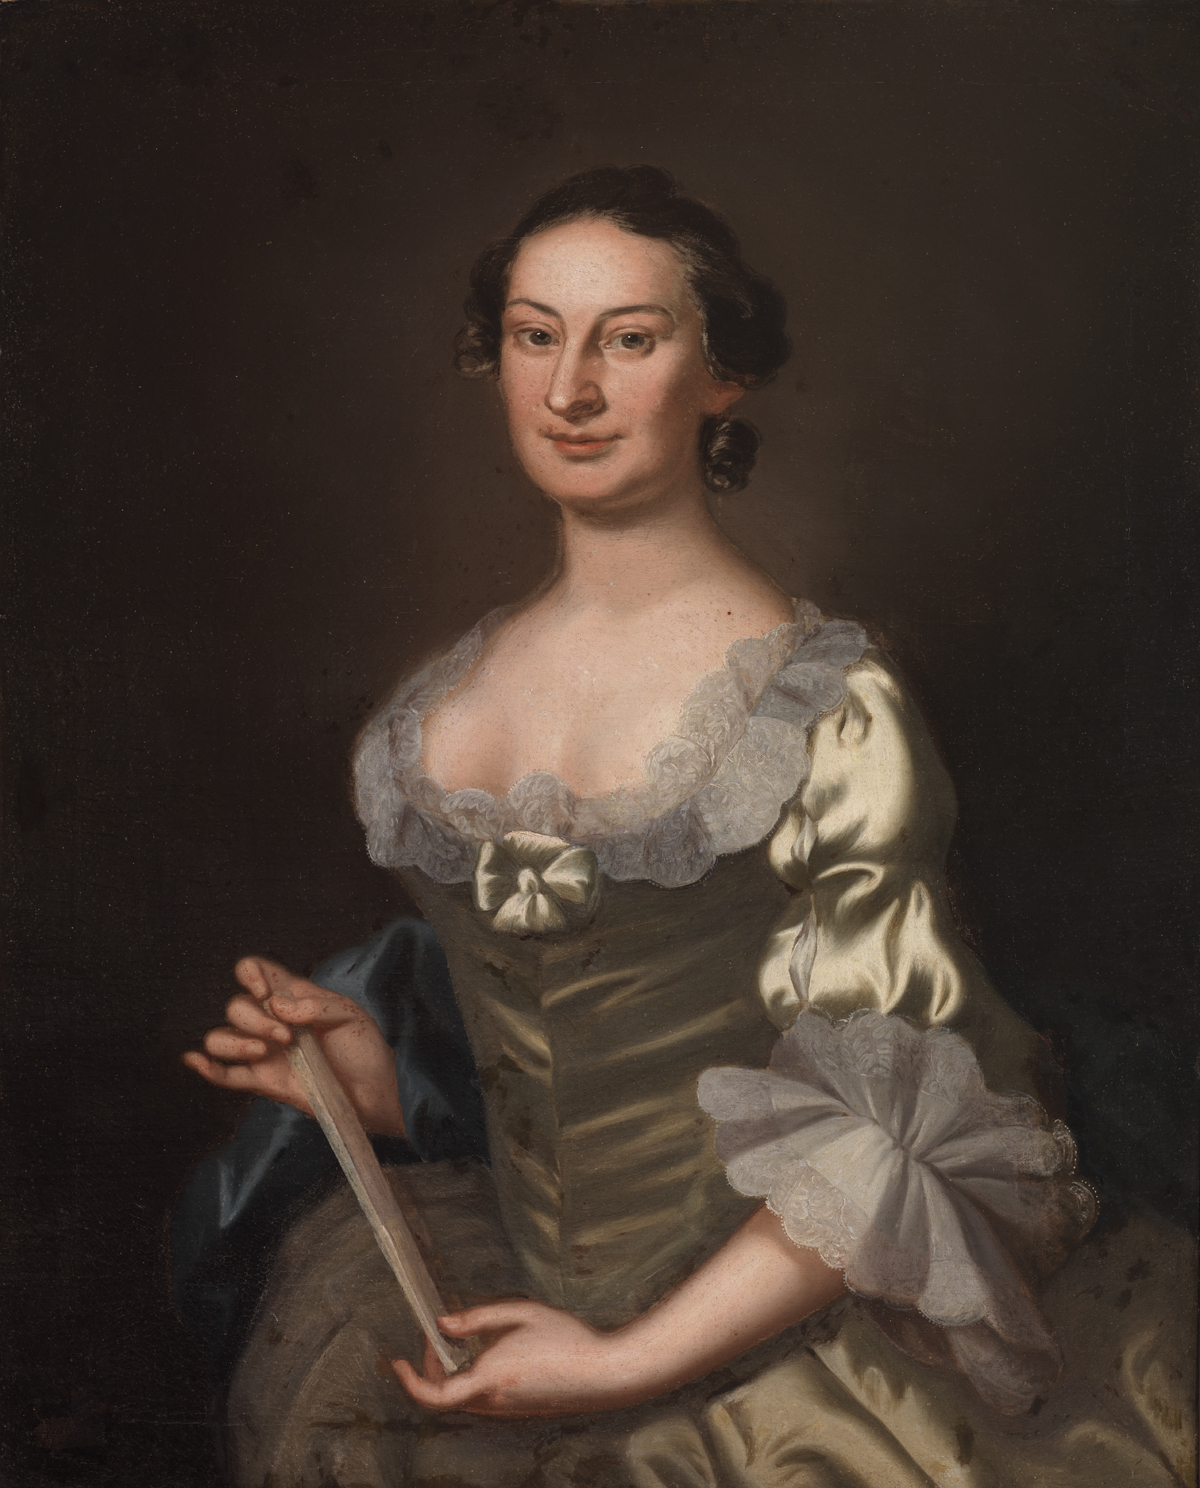 Elizabeth Harrison Randolph, c. 1755, by John Wollaston